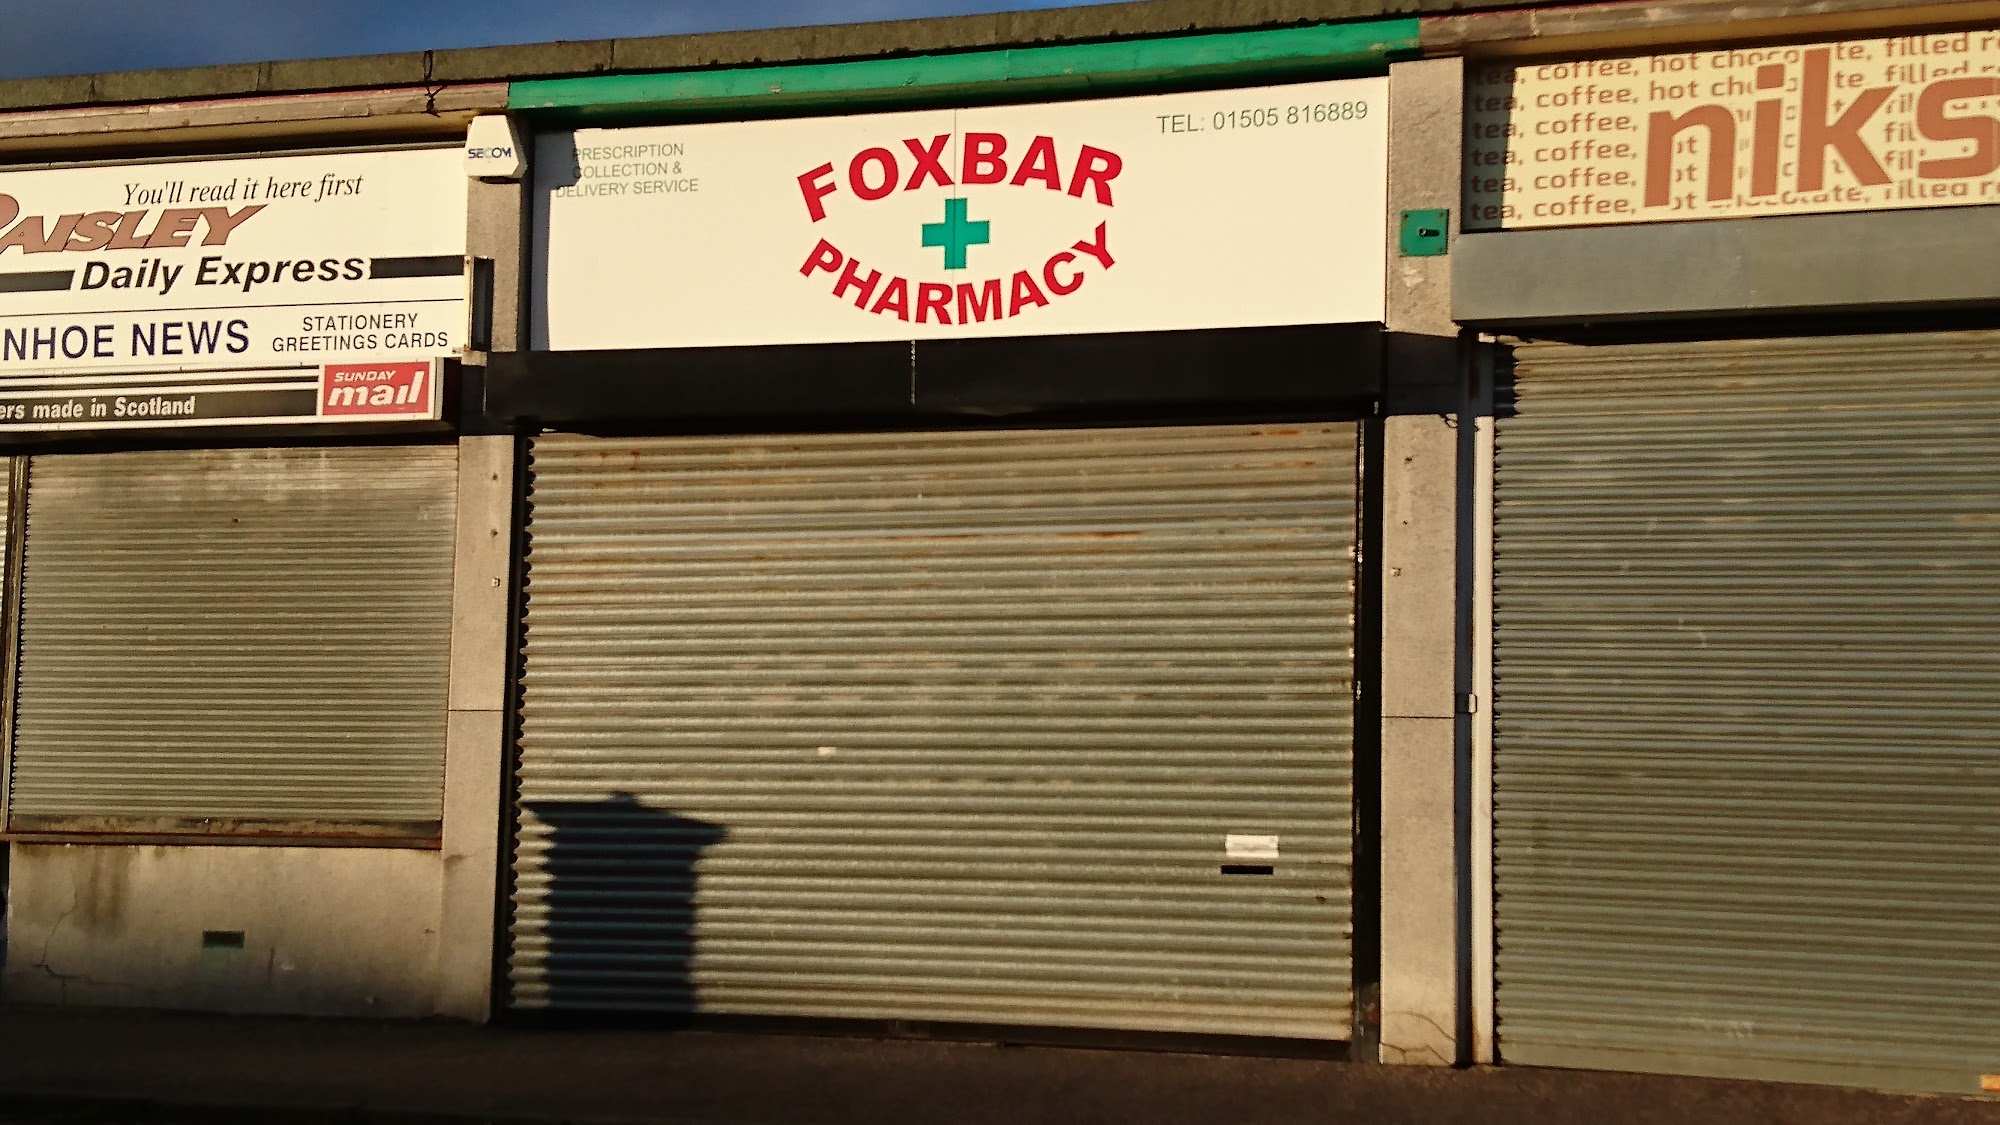 Foxbar Pharmacy